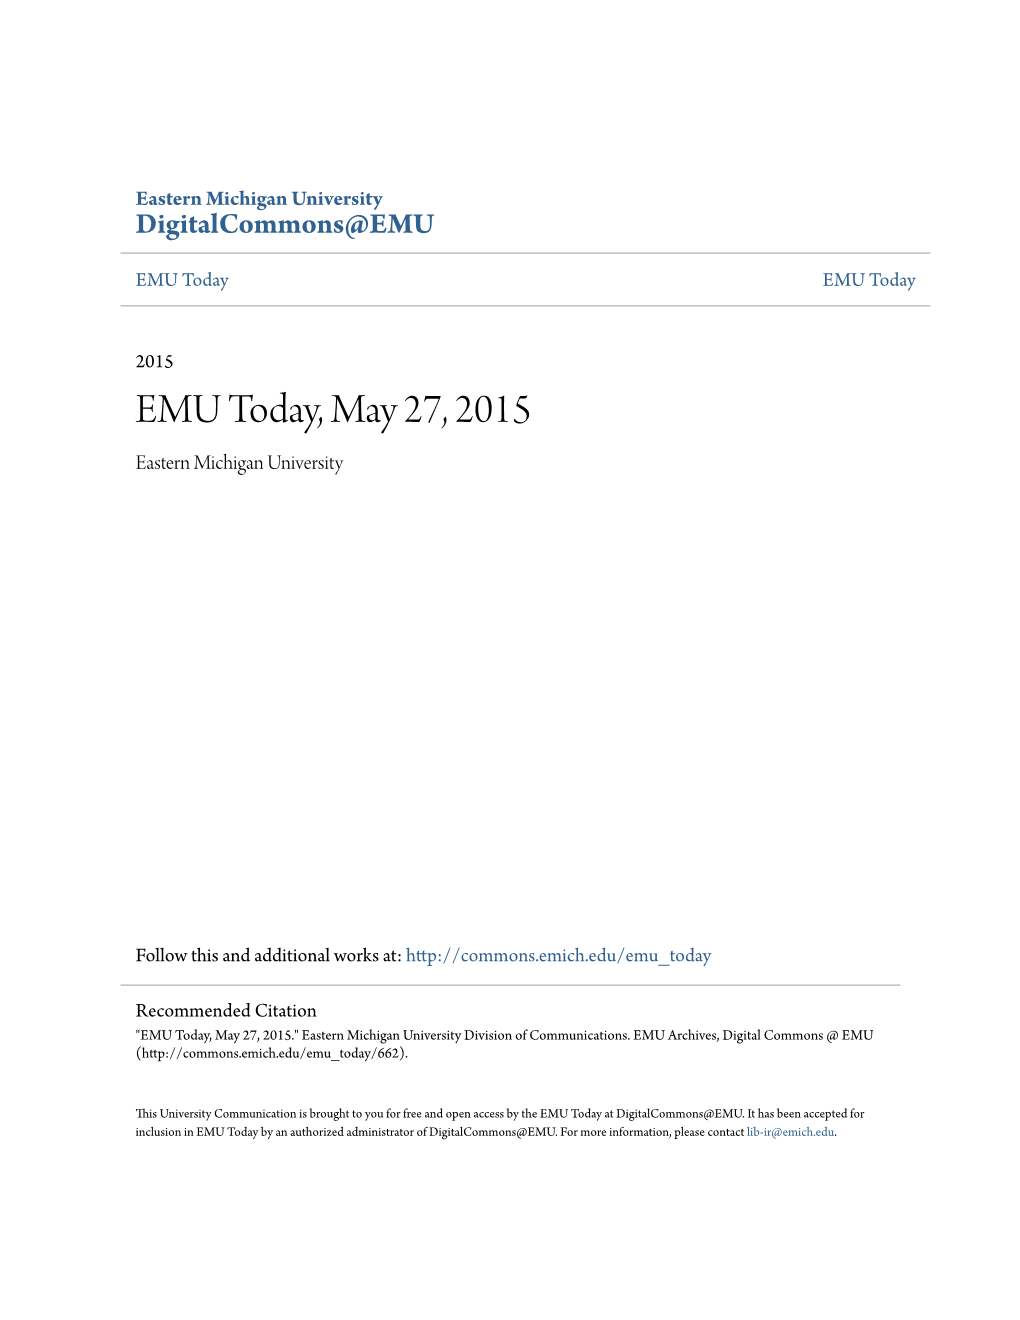 EMU Today, May 27, 2015 Eastern Michigan University